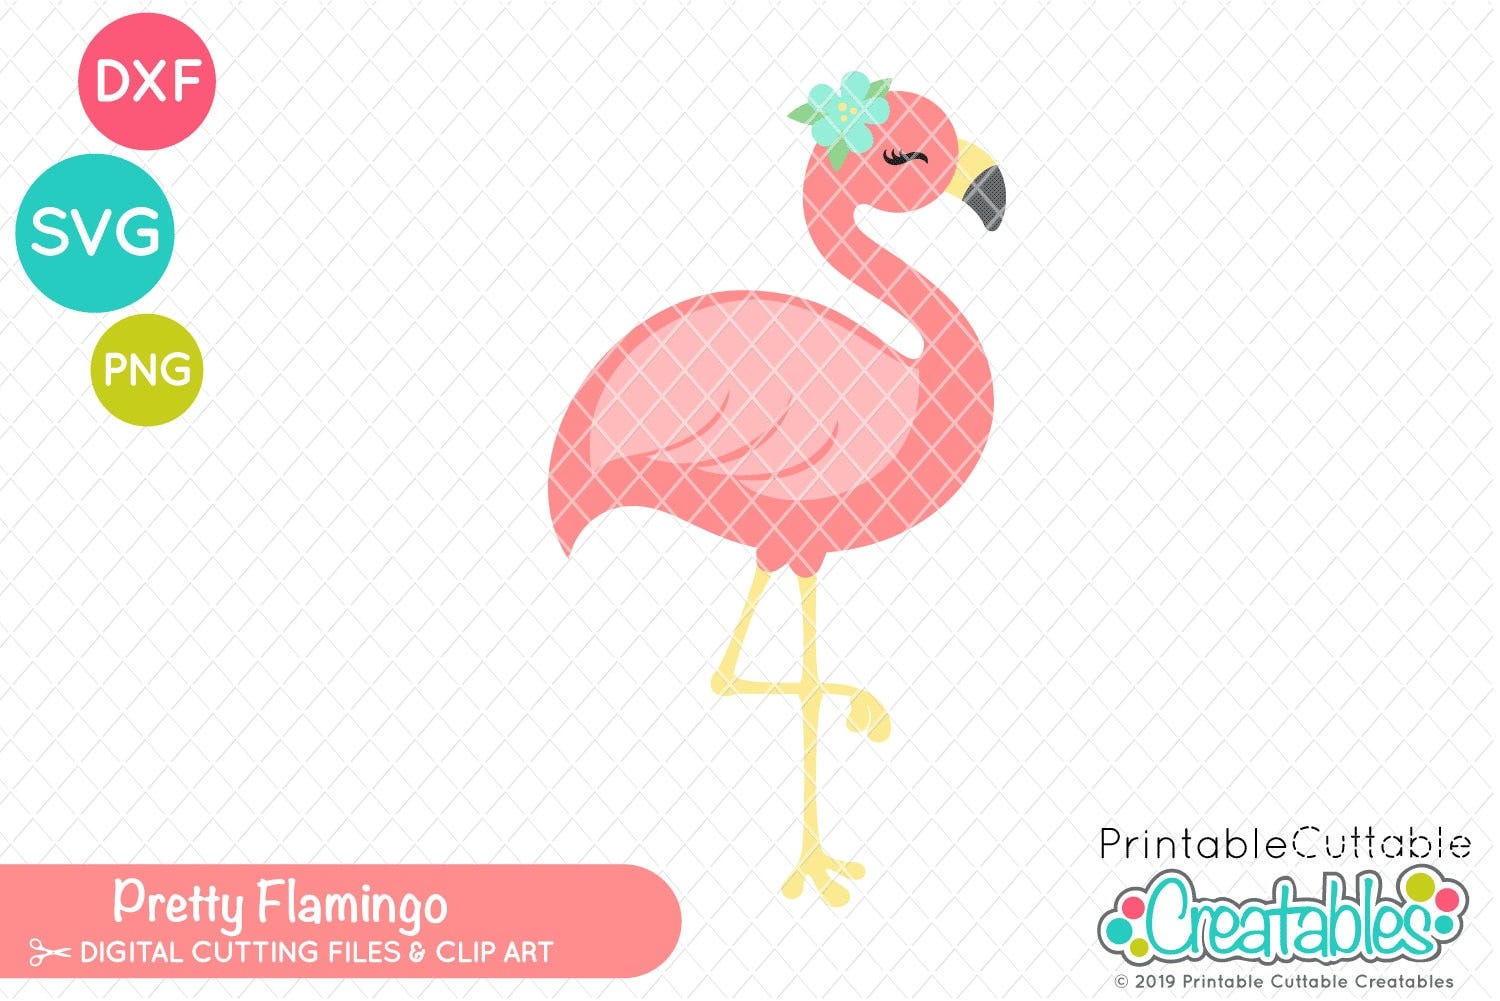 Pretty Flamingo SVG Cut File & Clipart E460 - SVG DXF files for Silhouette + Cricut - Includes Limited Commercial Use!